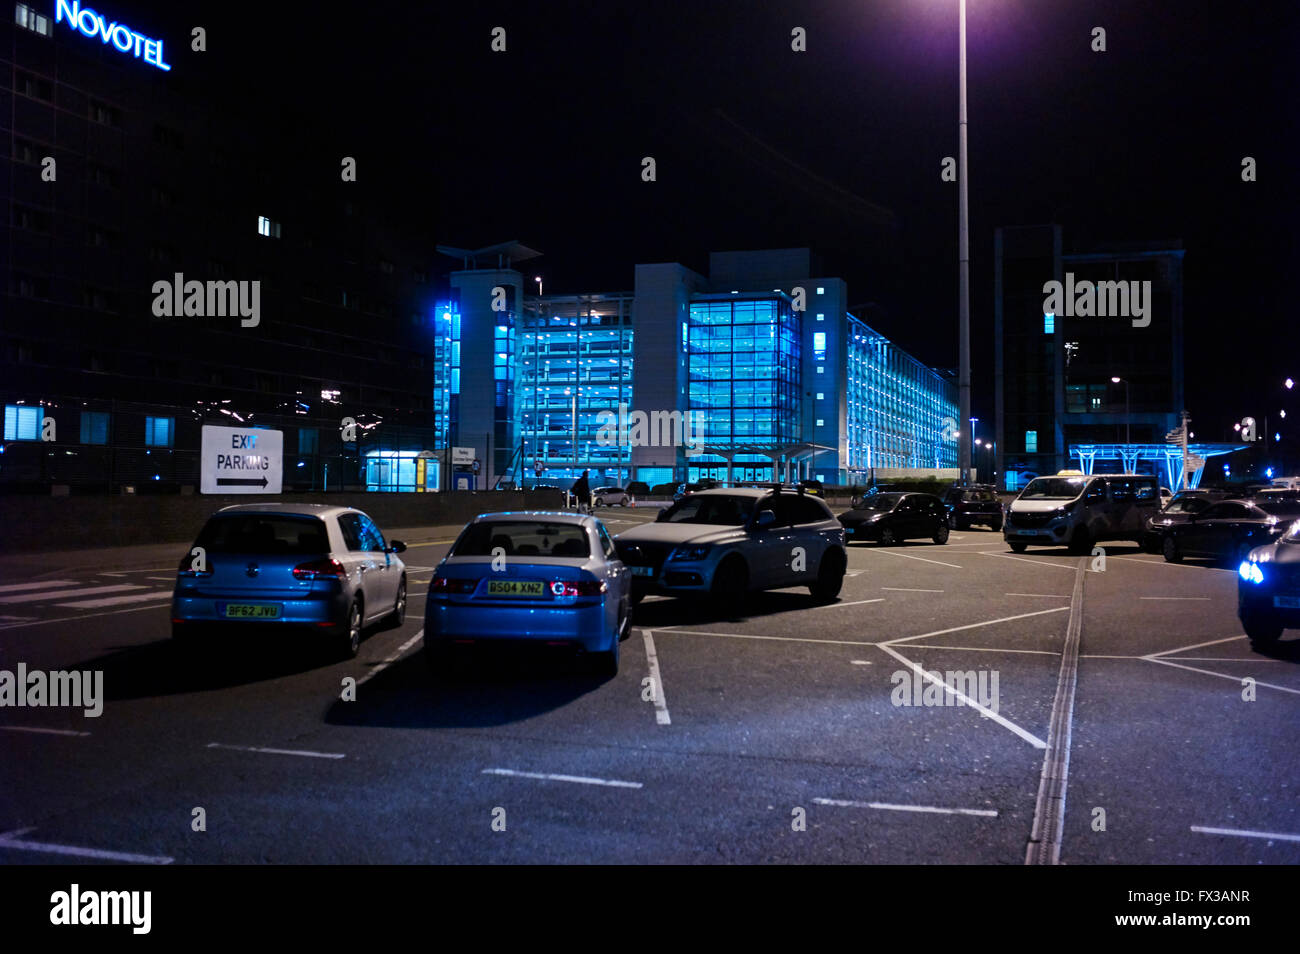 Birmingham airport car park at night Stock Photo